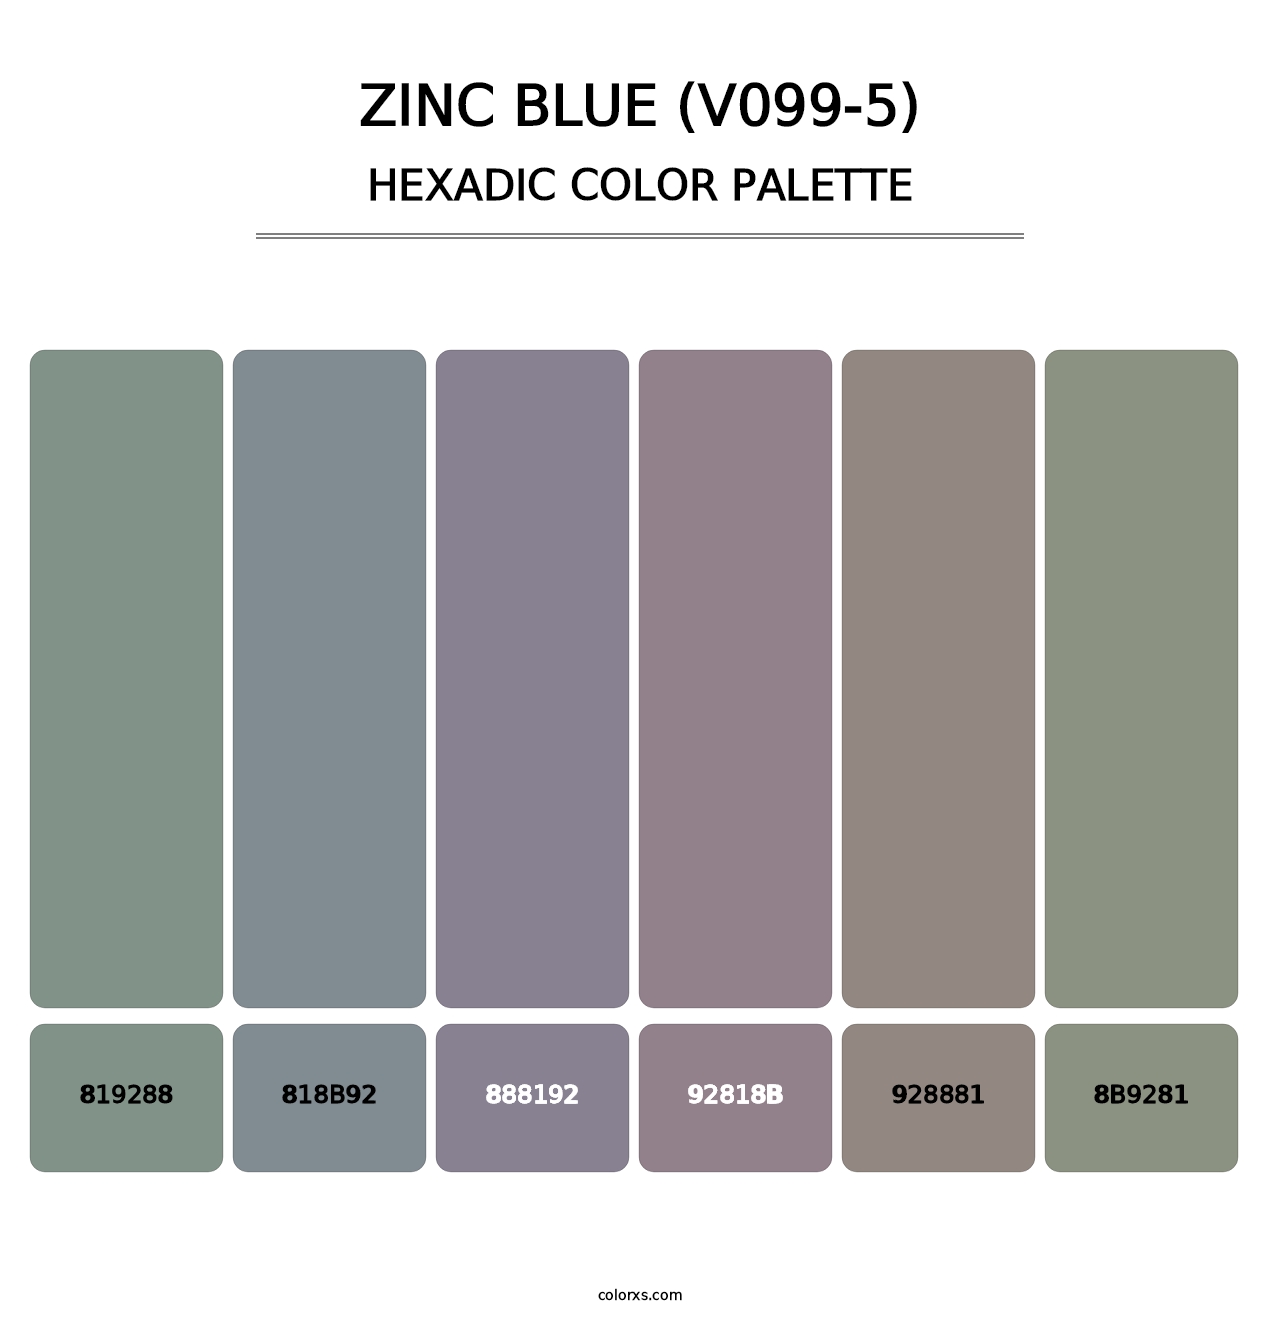 Zinc Blue (V099-5) - Hexadic Color Palette